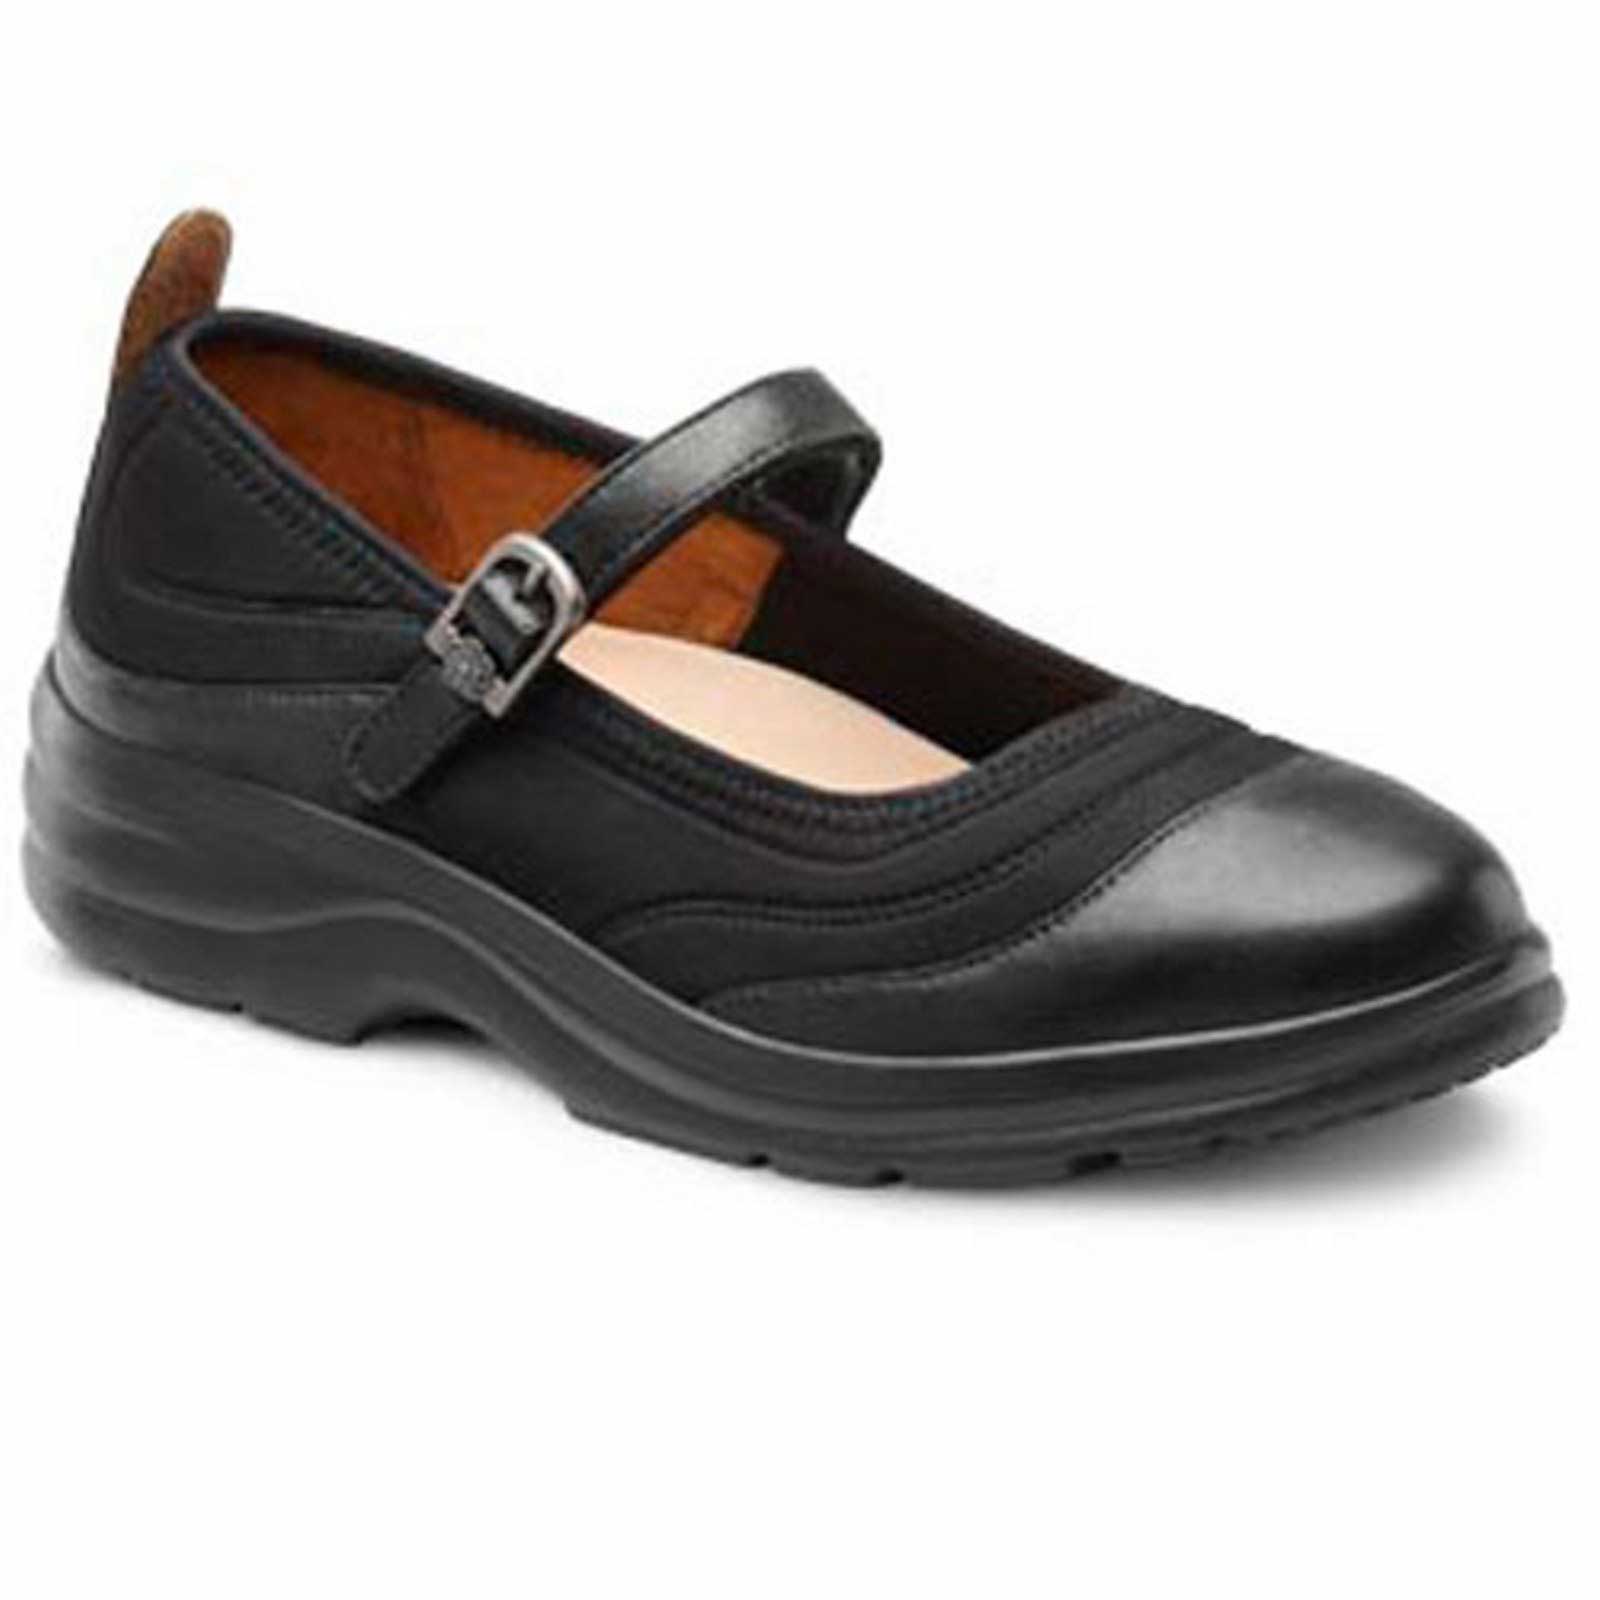 comfort dress shoes for women